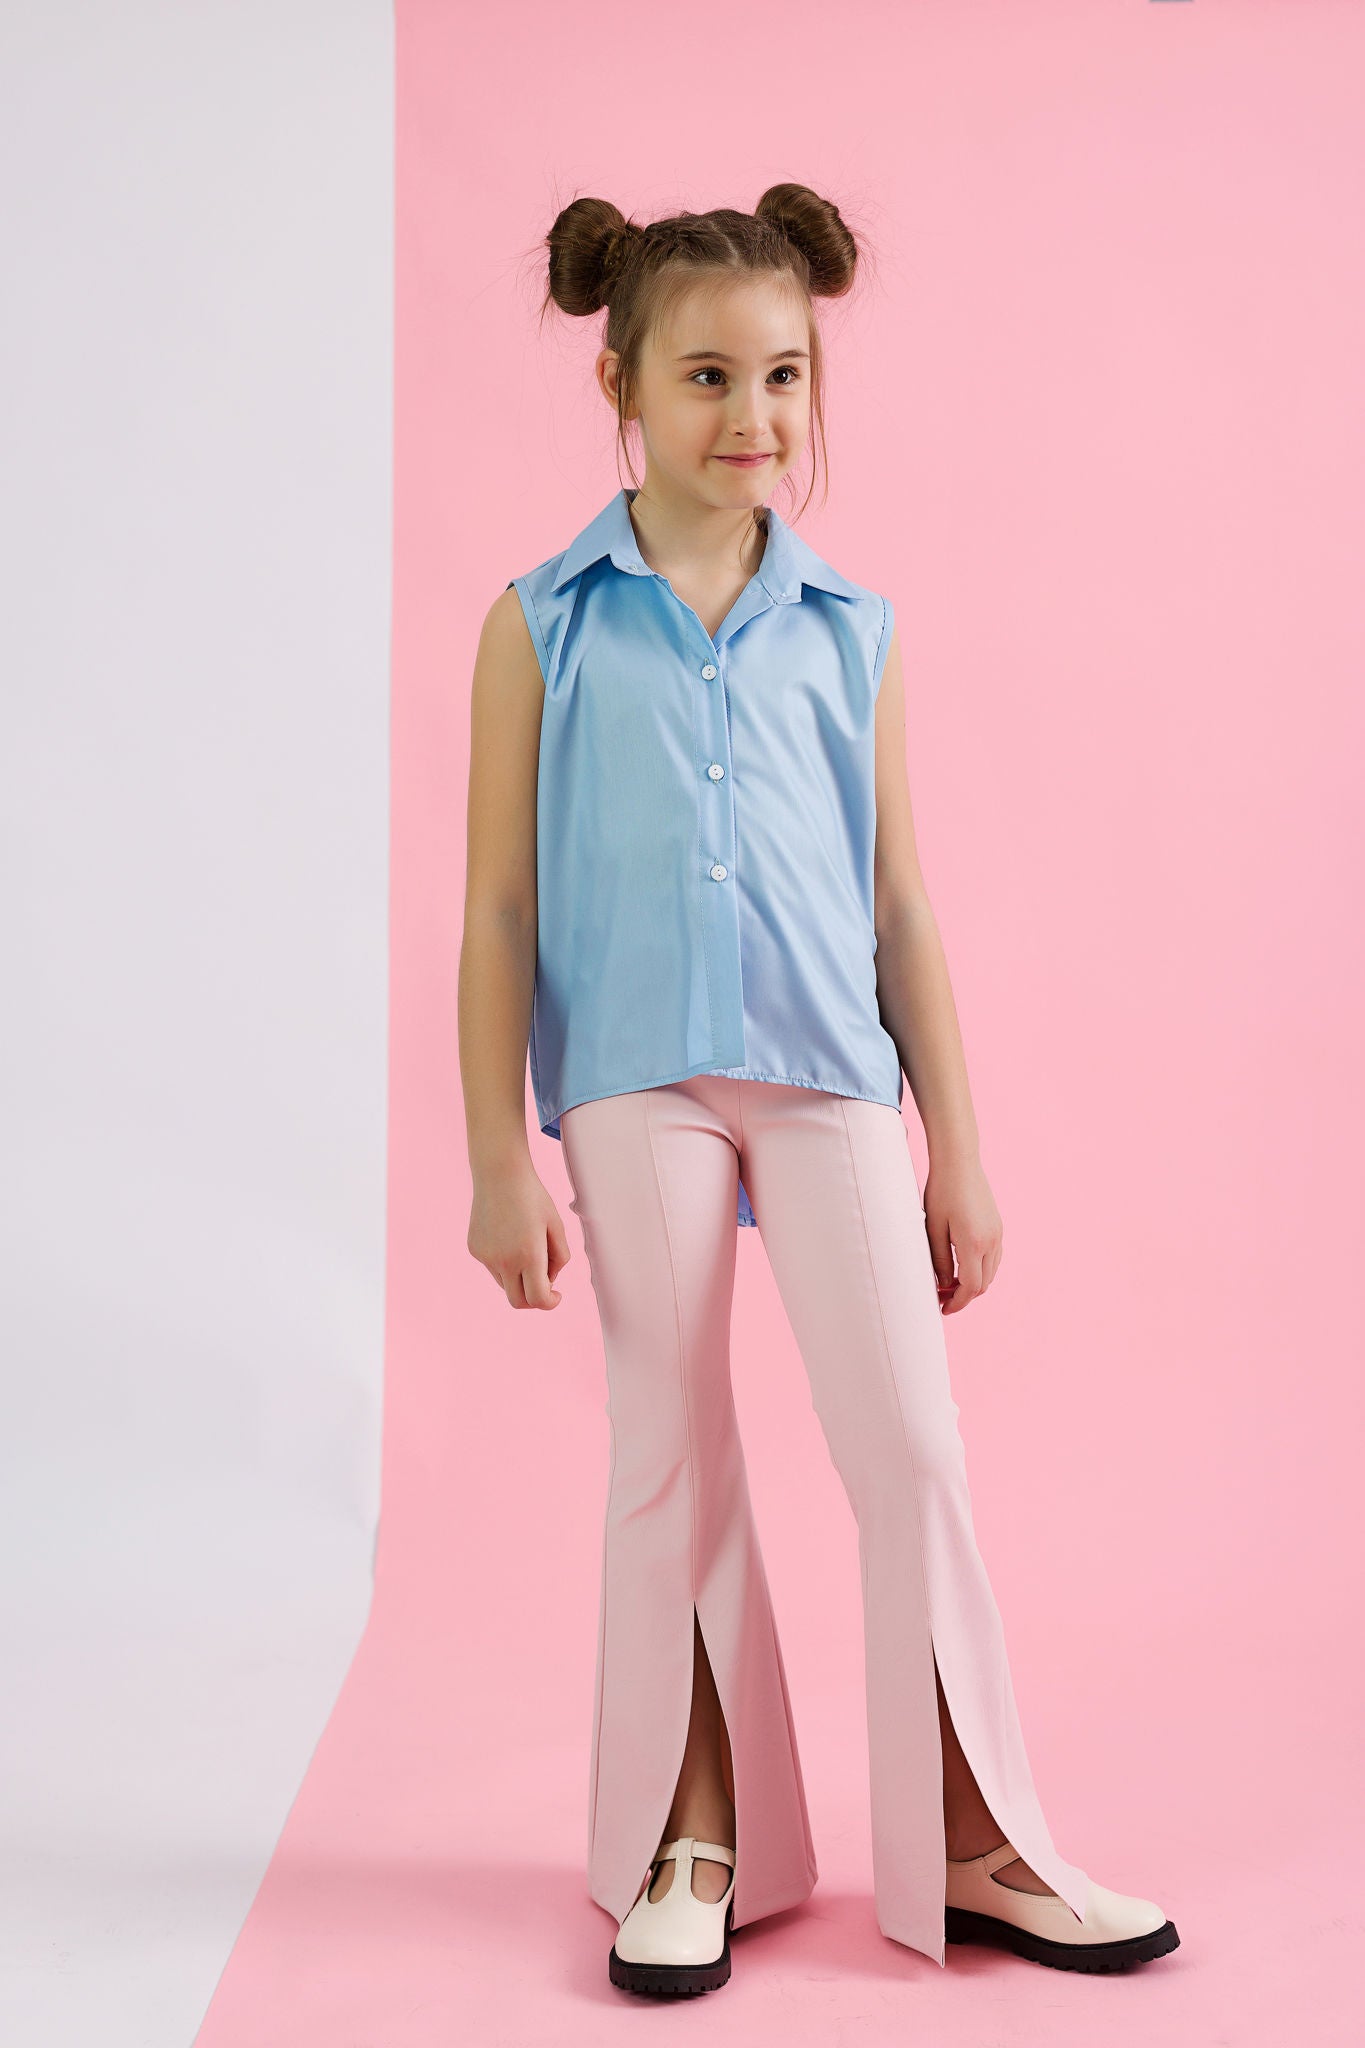 Compleu camasa bleu cu fundite si pantaloni evazati roz din piele ecologica pentru fete - Alis